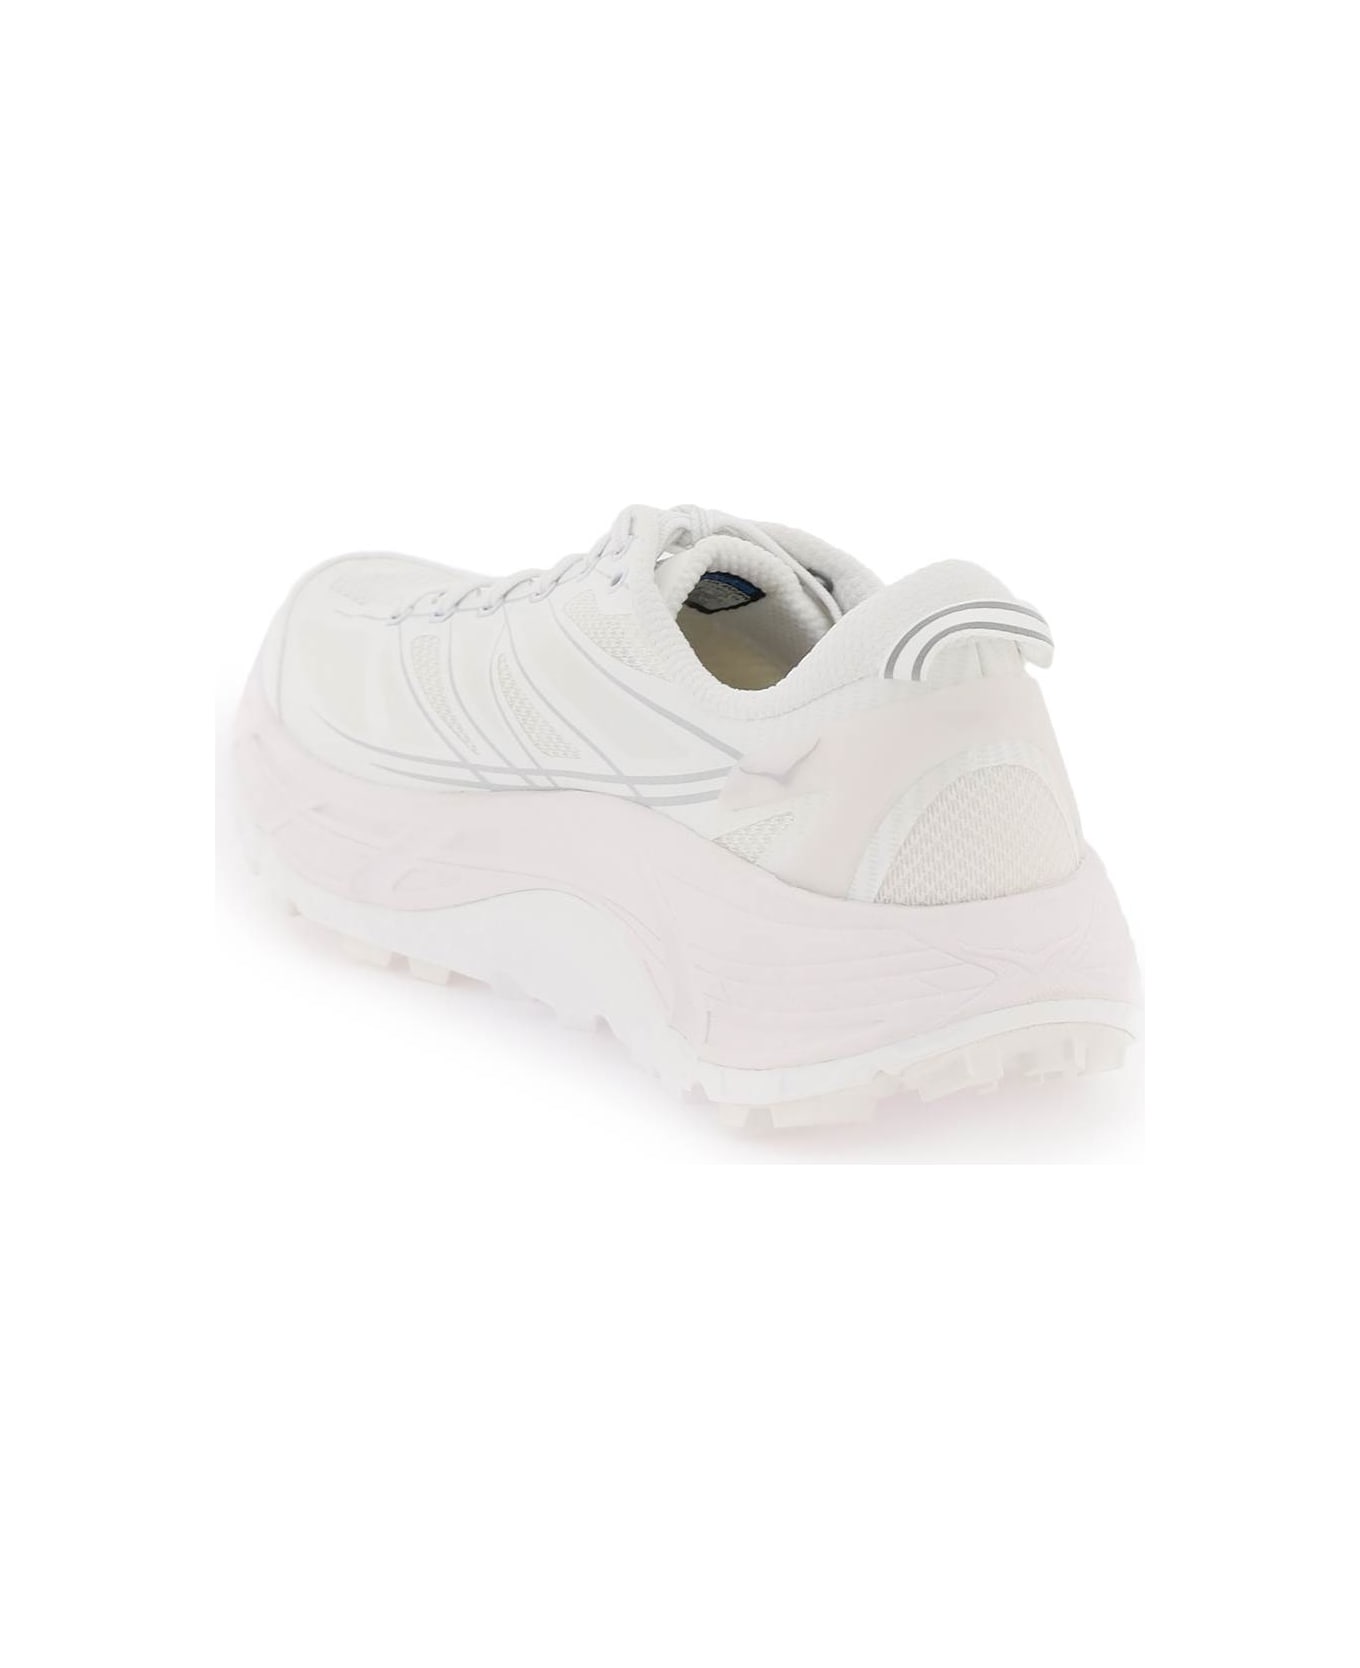 Hoka 'mafate Speed 2' Sneakers - Wlrc White / Lunar Rock スニーカー